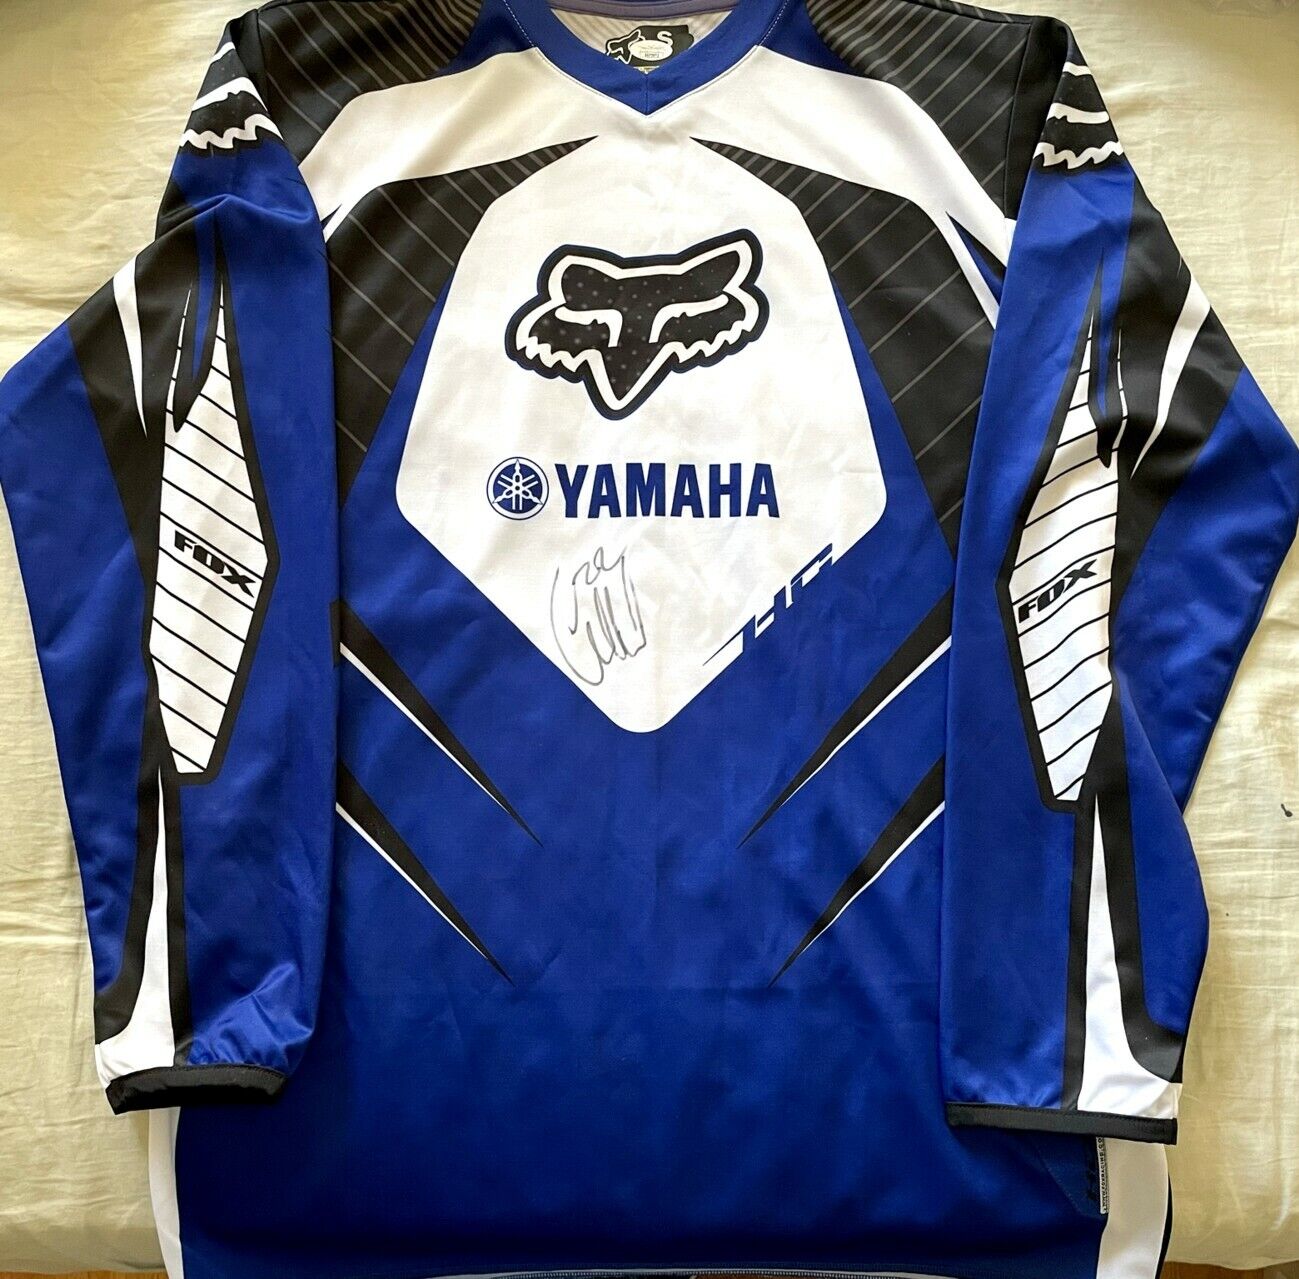 Chad Reed Autographed Signed Yamaha Fox Racing Motocross Supercross Jersey (jsa)